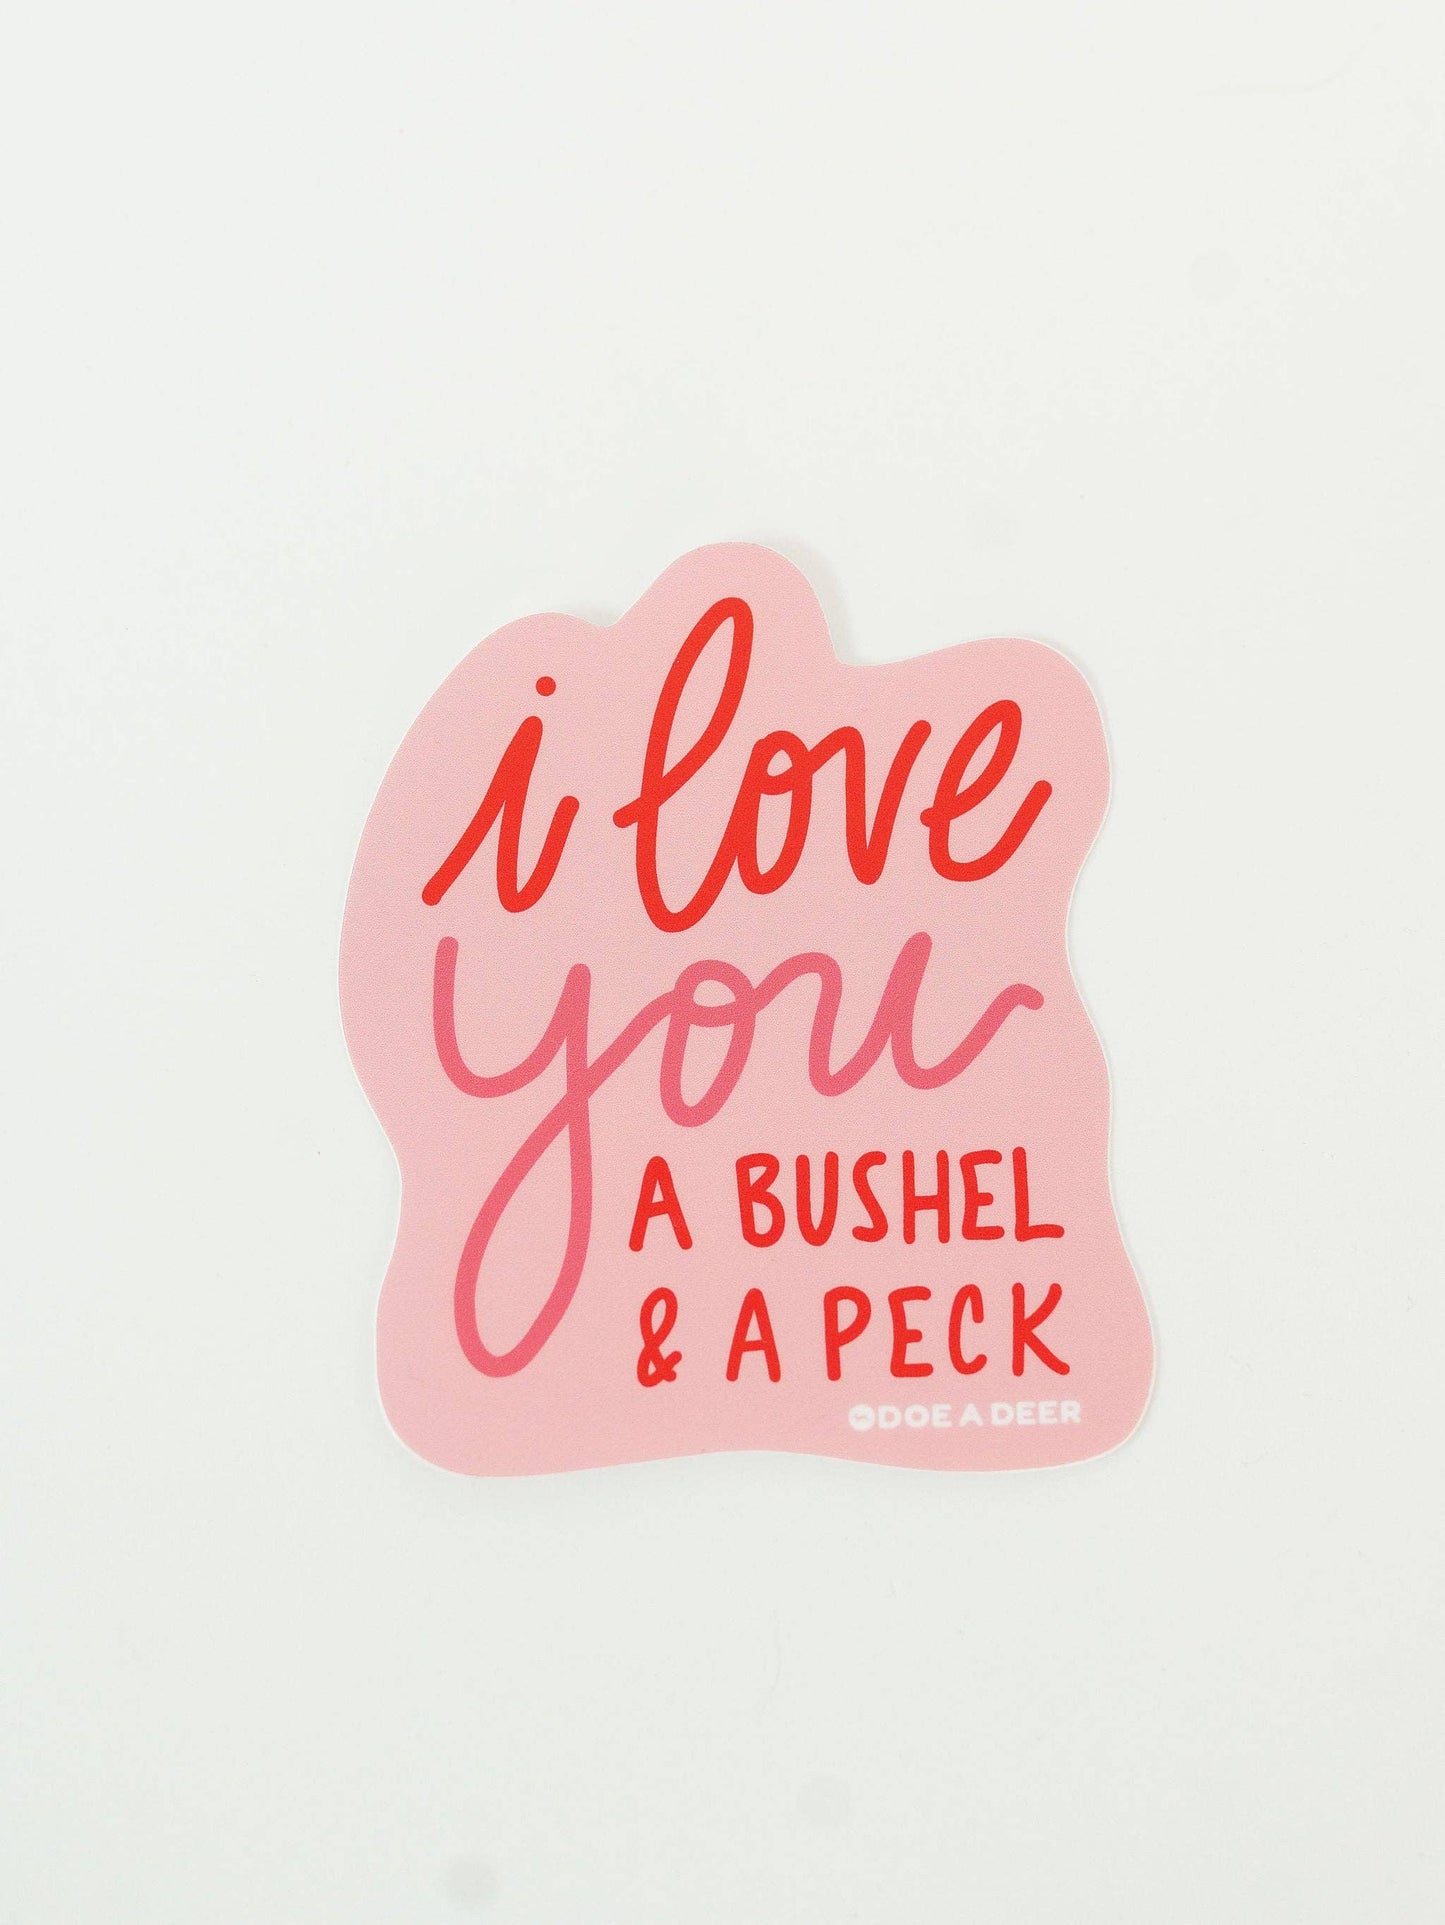 I Love You a Bushel & A Peck Sticker